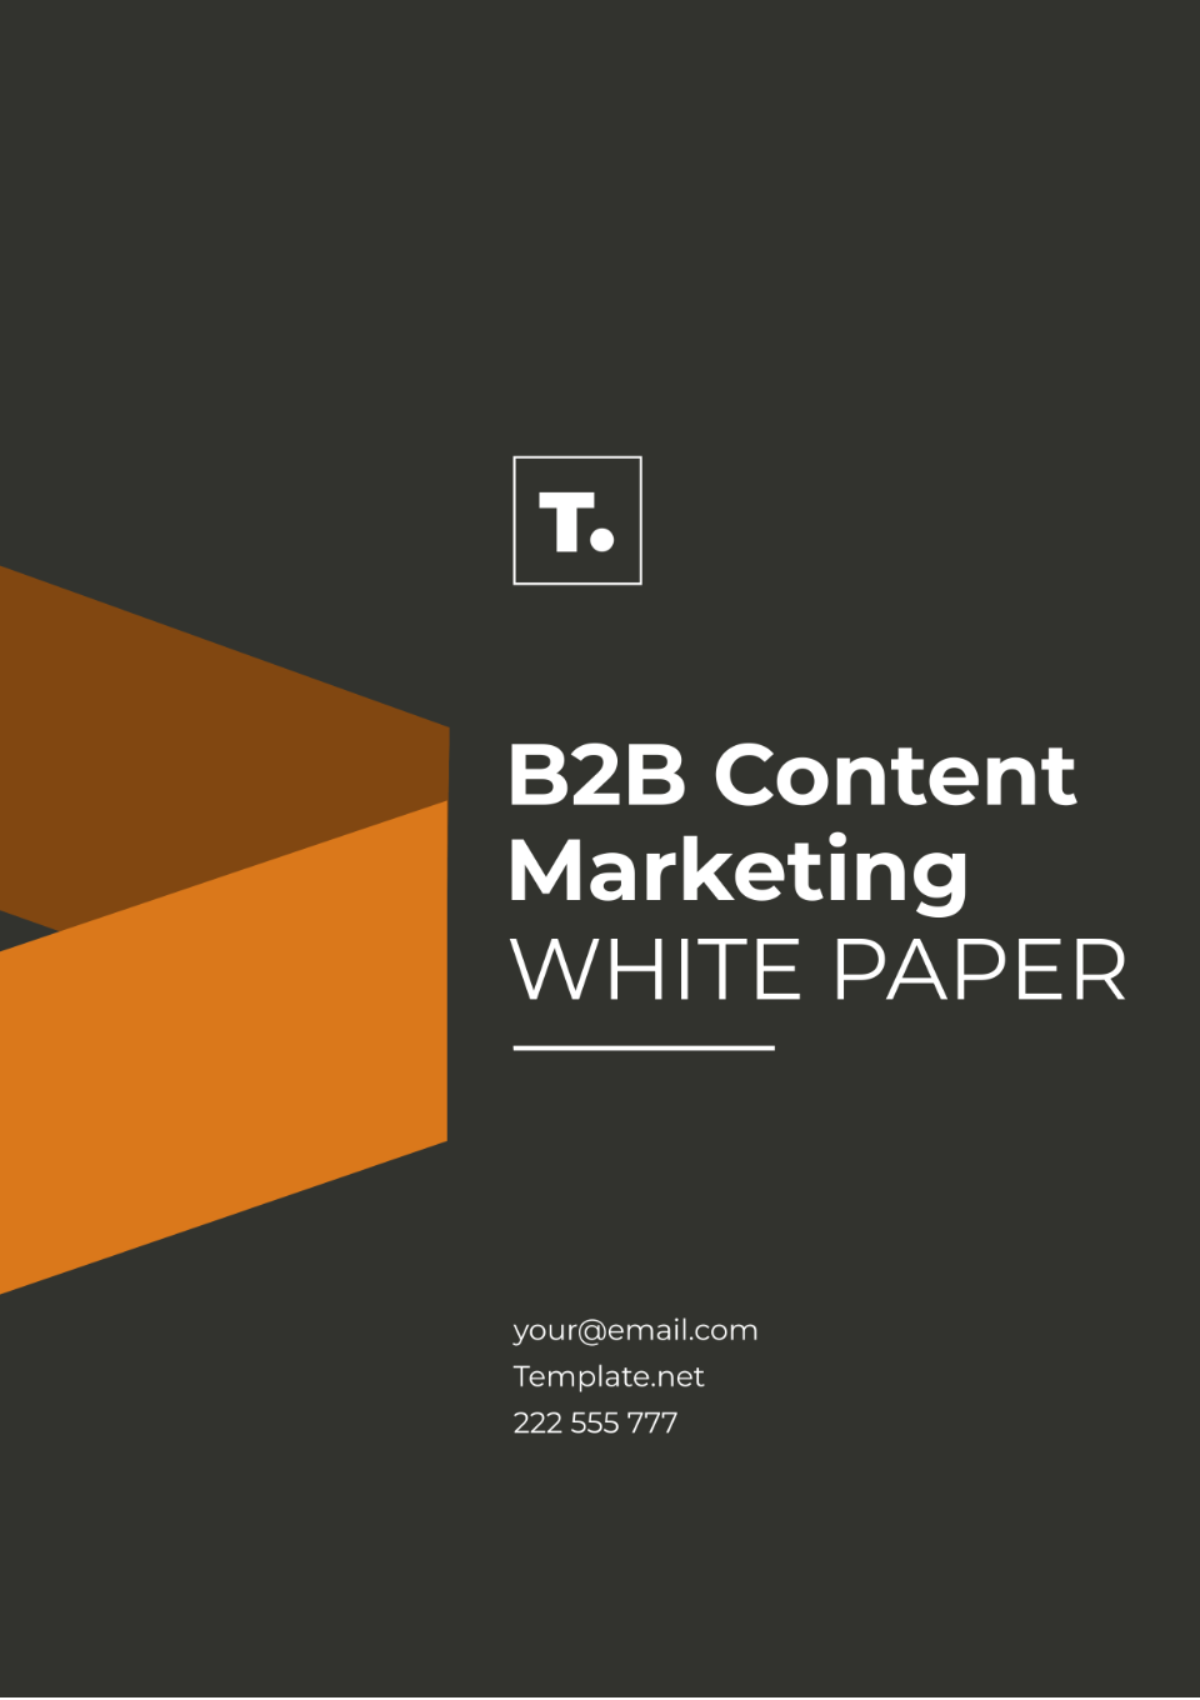 B2B Content Marketing White Paper Template